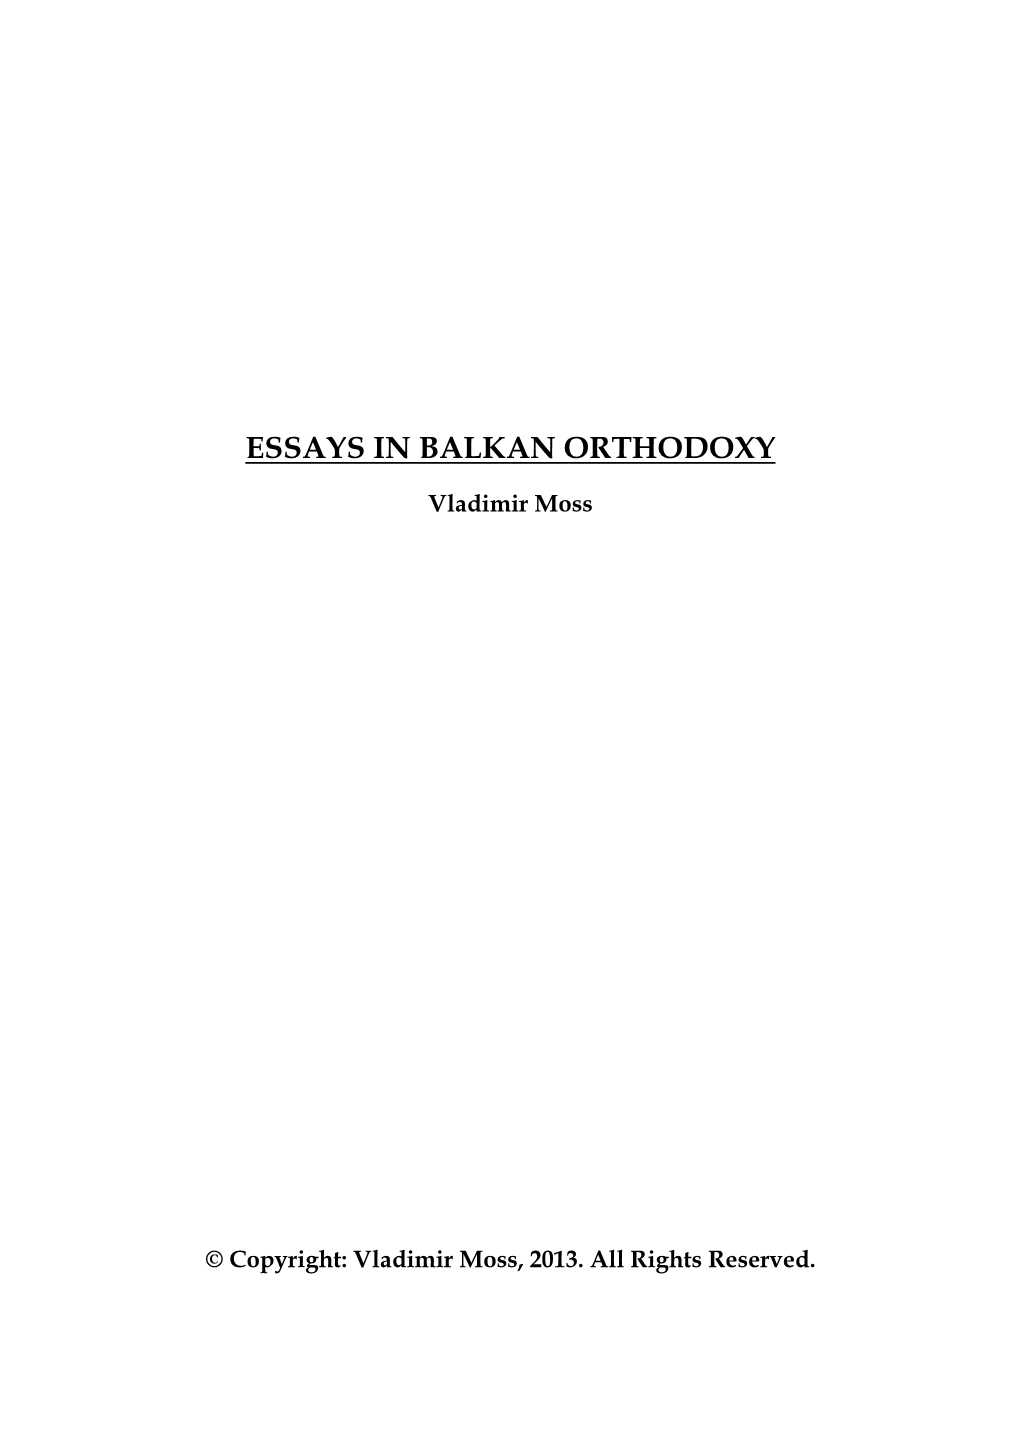 Essays in Balkan Orthodoxy